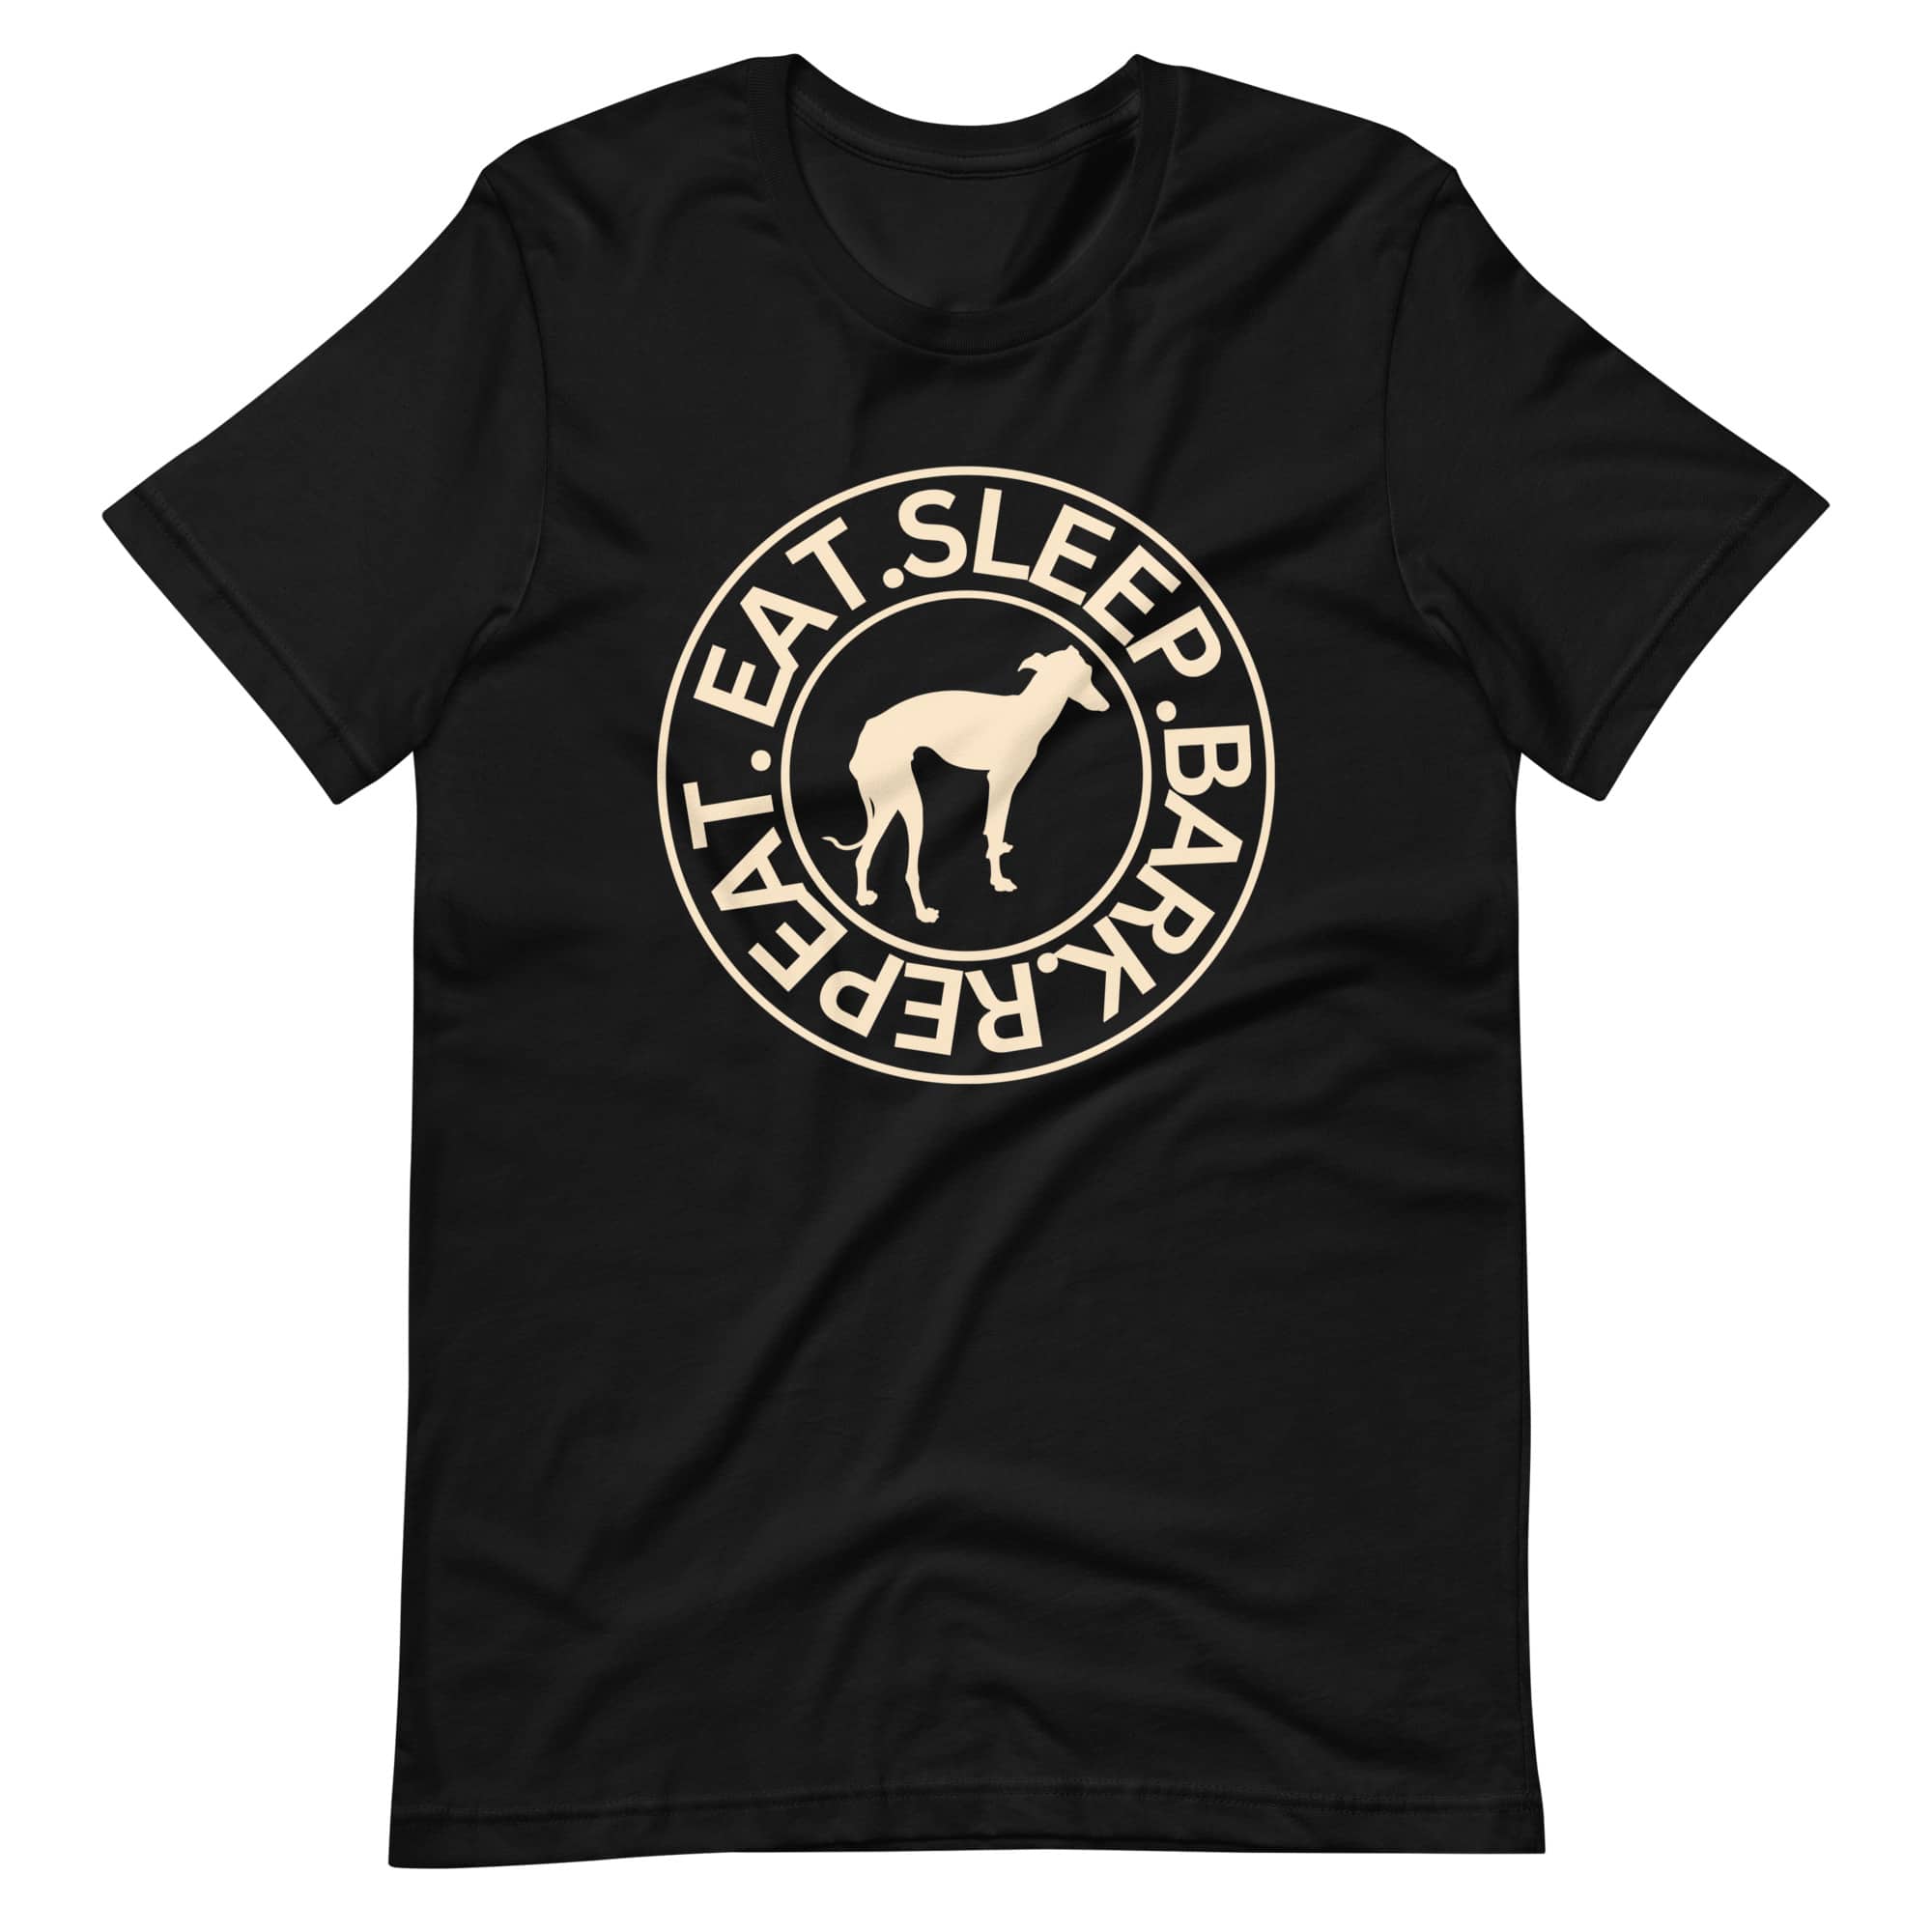 Eat Sleep Bark Repeat Italian Greyhound Unisex T-Shirt. Black